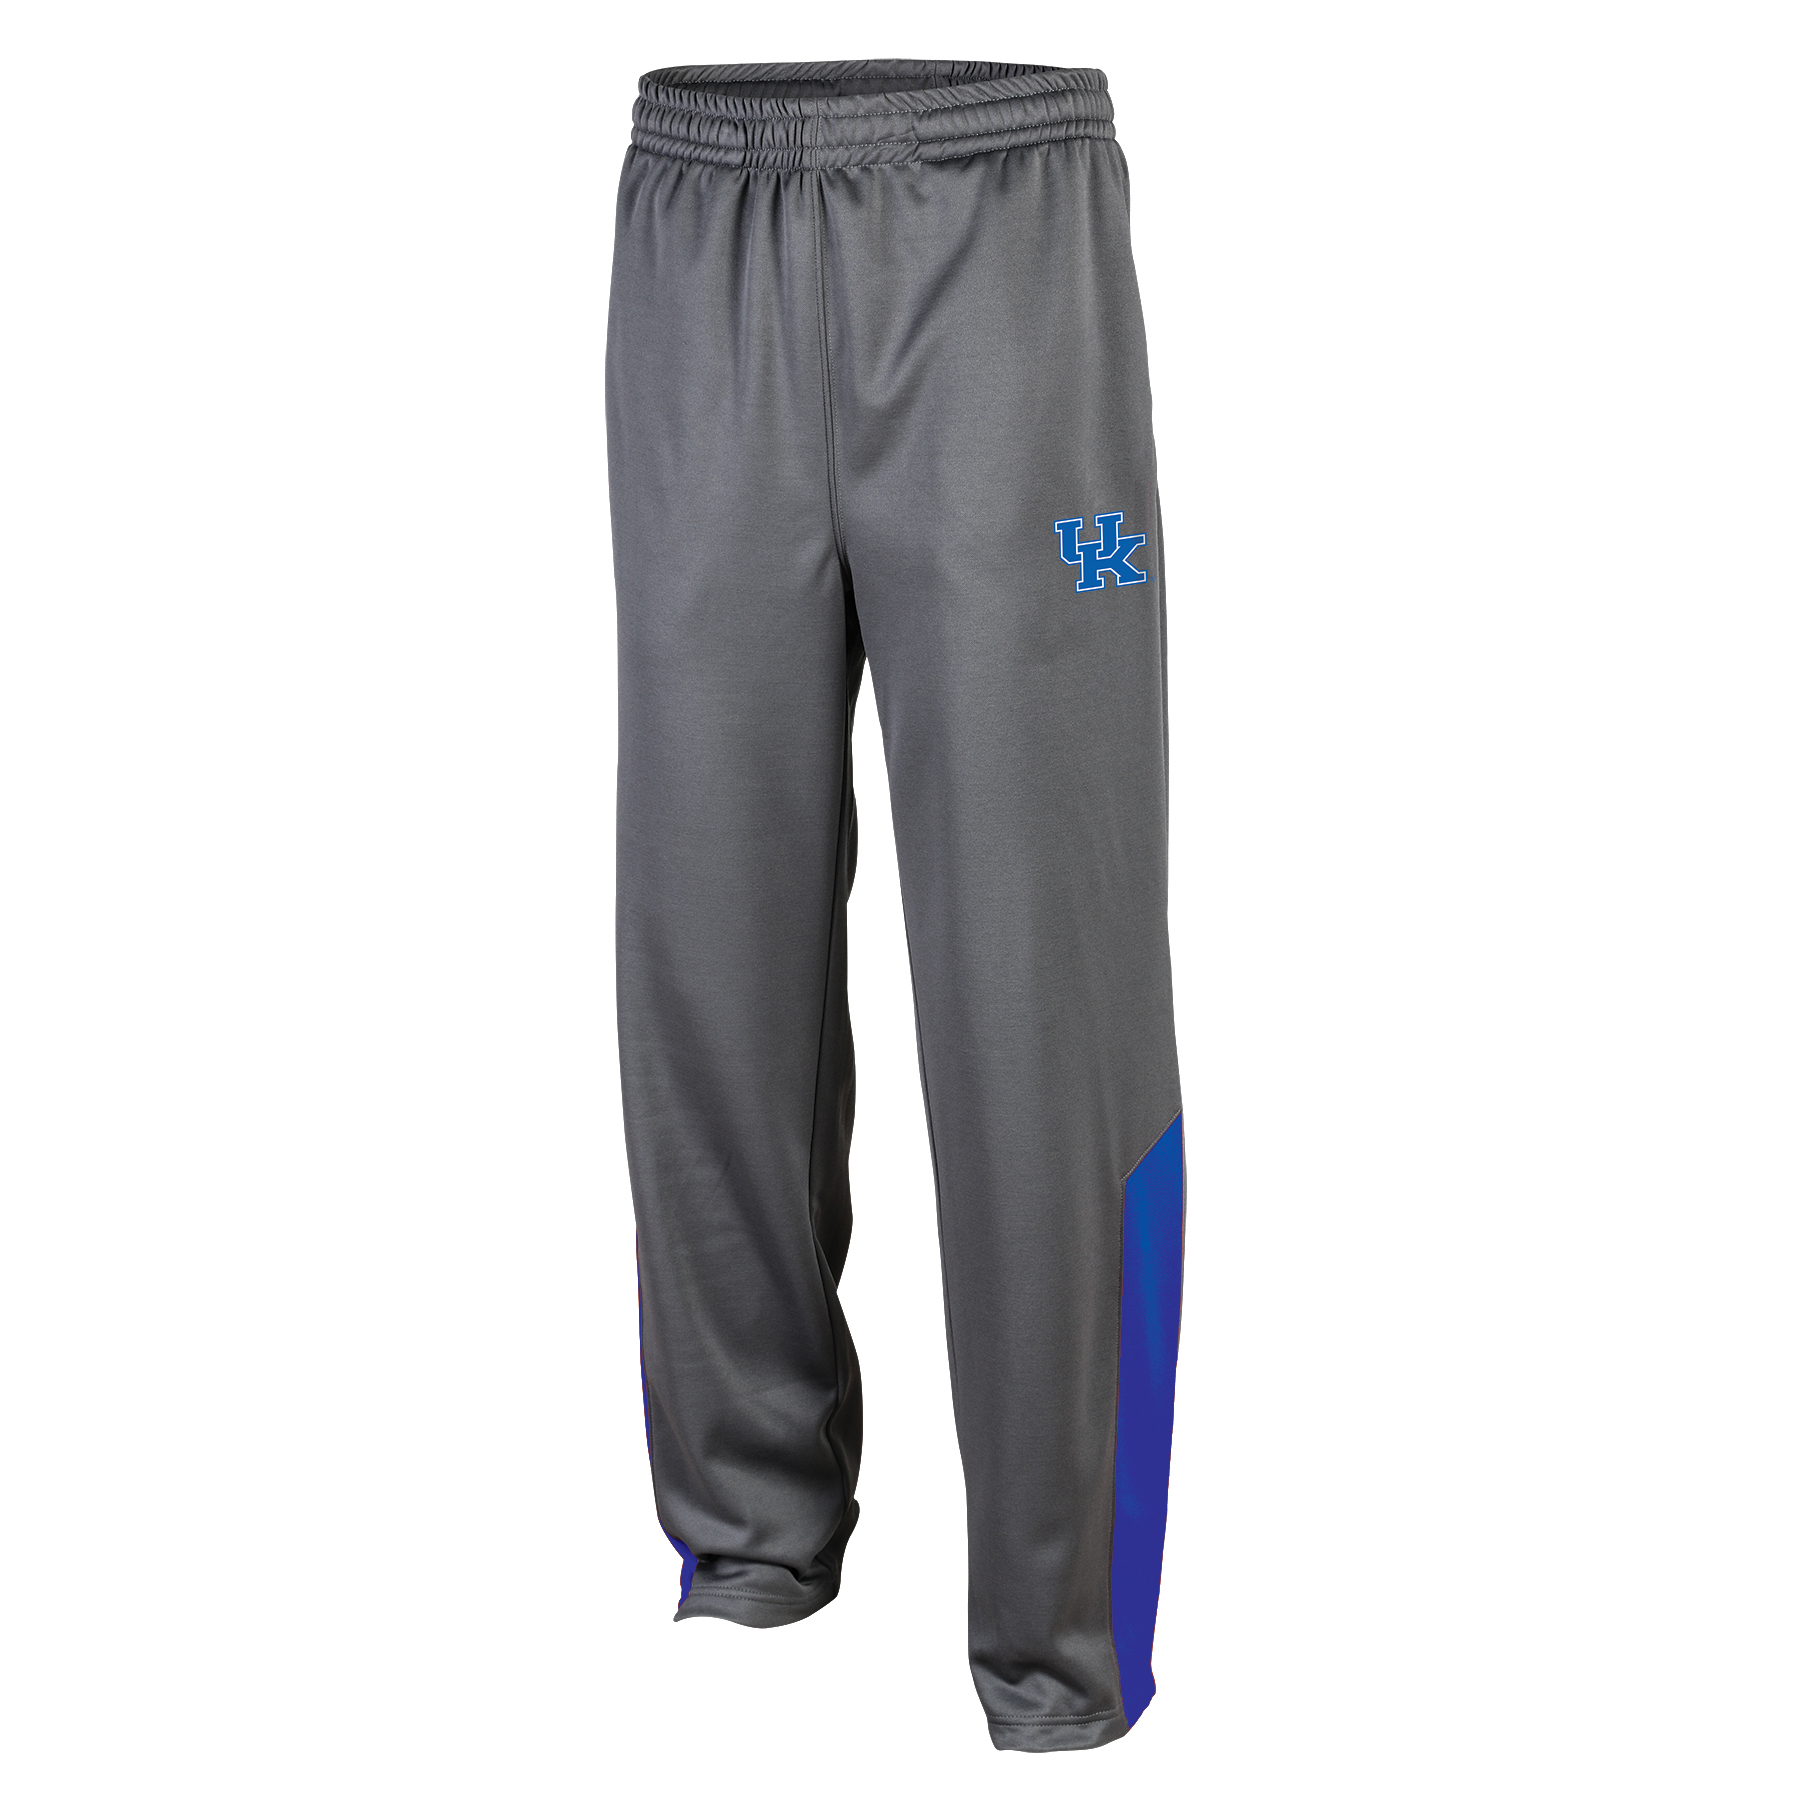 NCAA Men's Lounge Pants - University of Kentucky